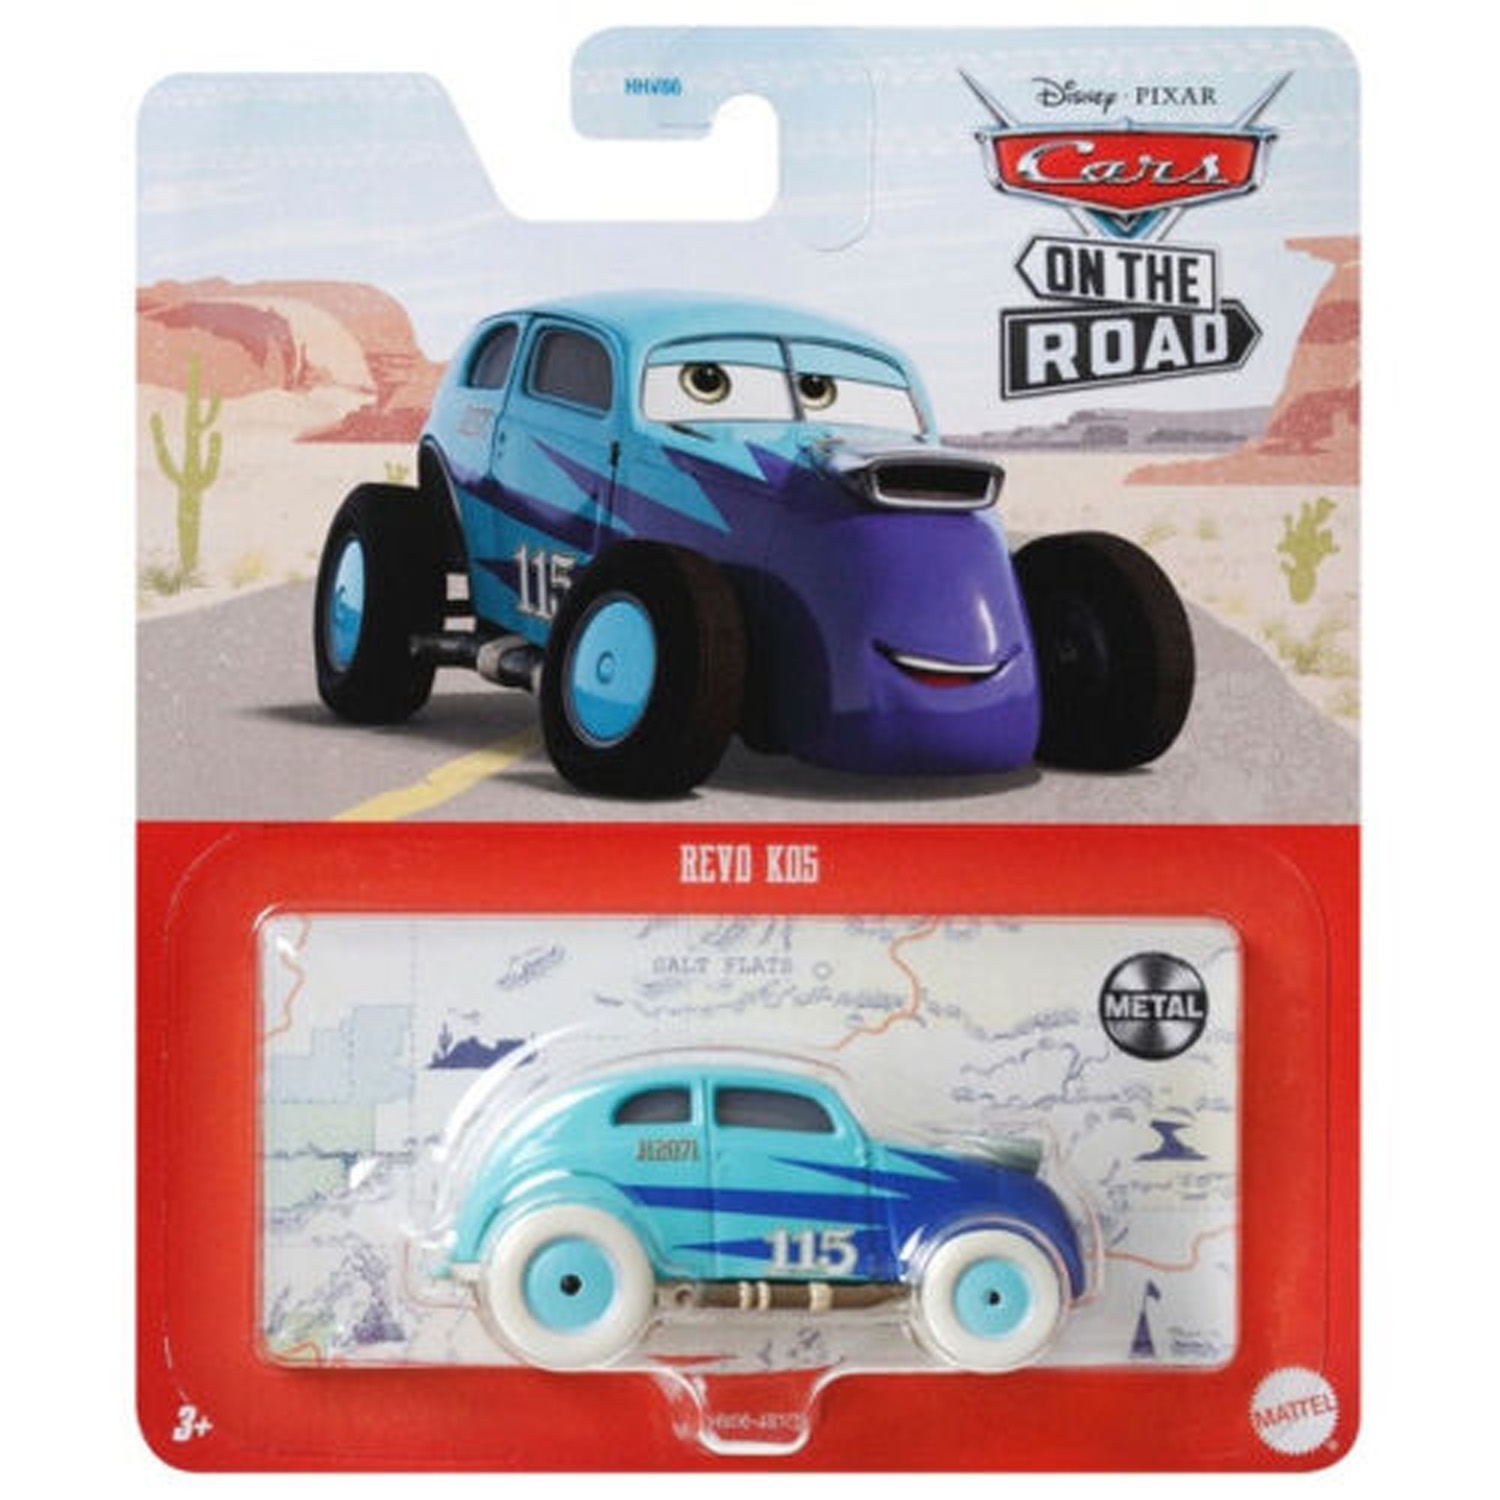 Disney Pixar Cars On The Road Revo Kos Diecast